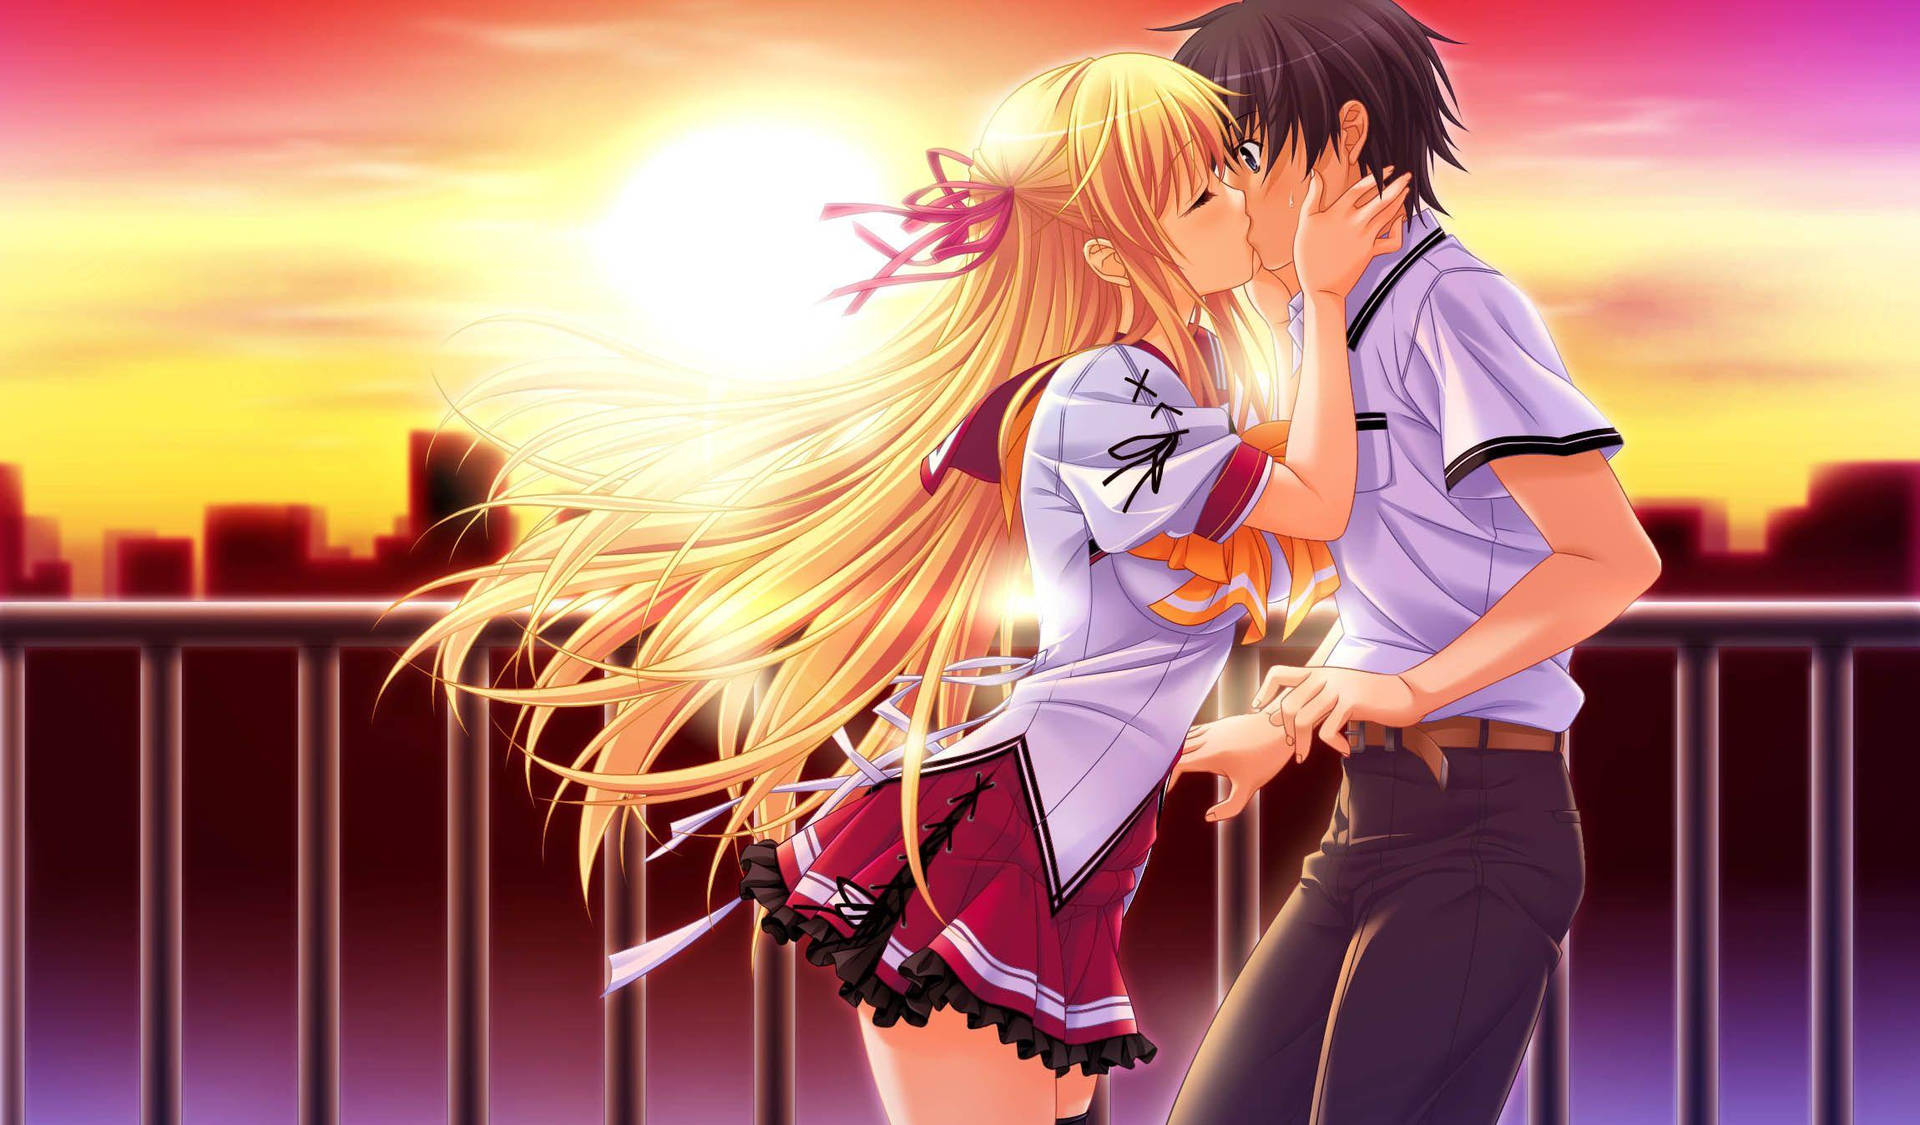 Kissing On Bridge Love Anime Background